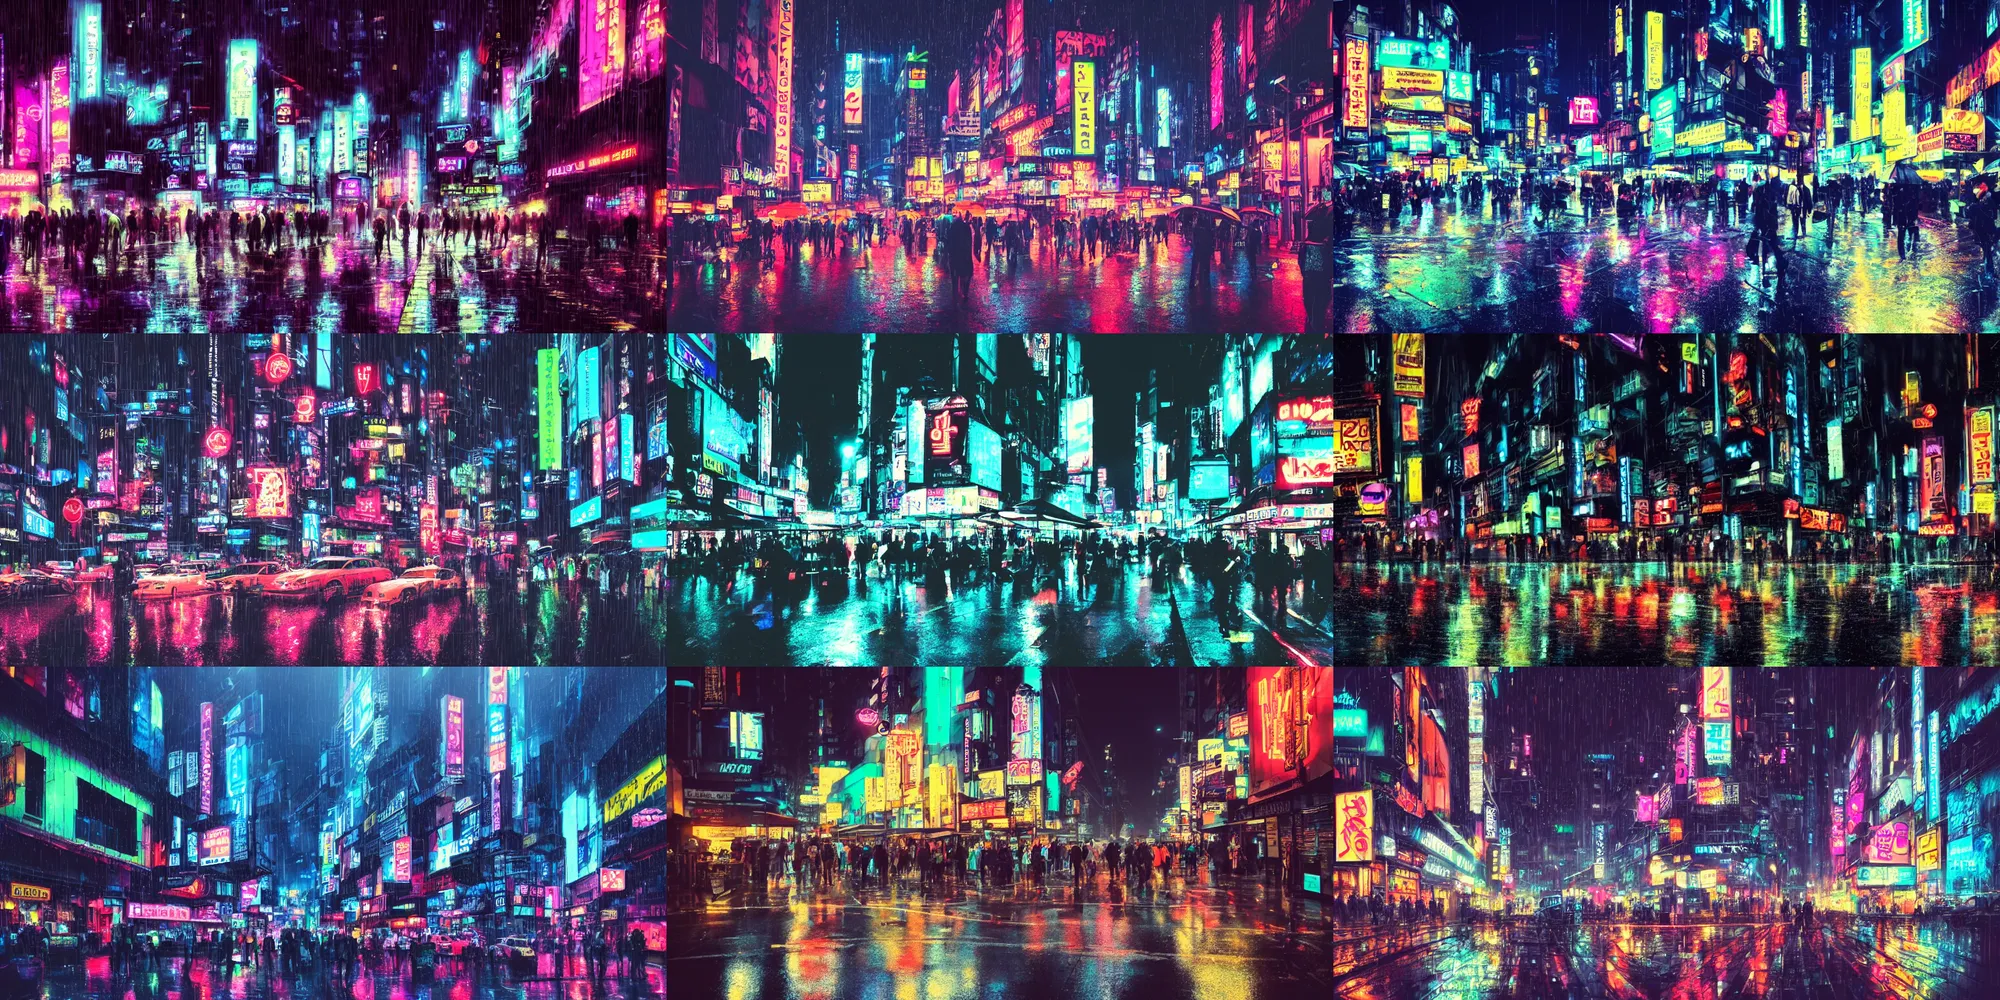 Prompt: A rainy cyberpunk city, neon lights, busy crowds